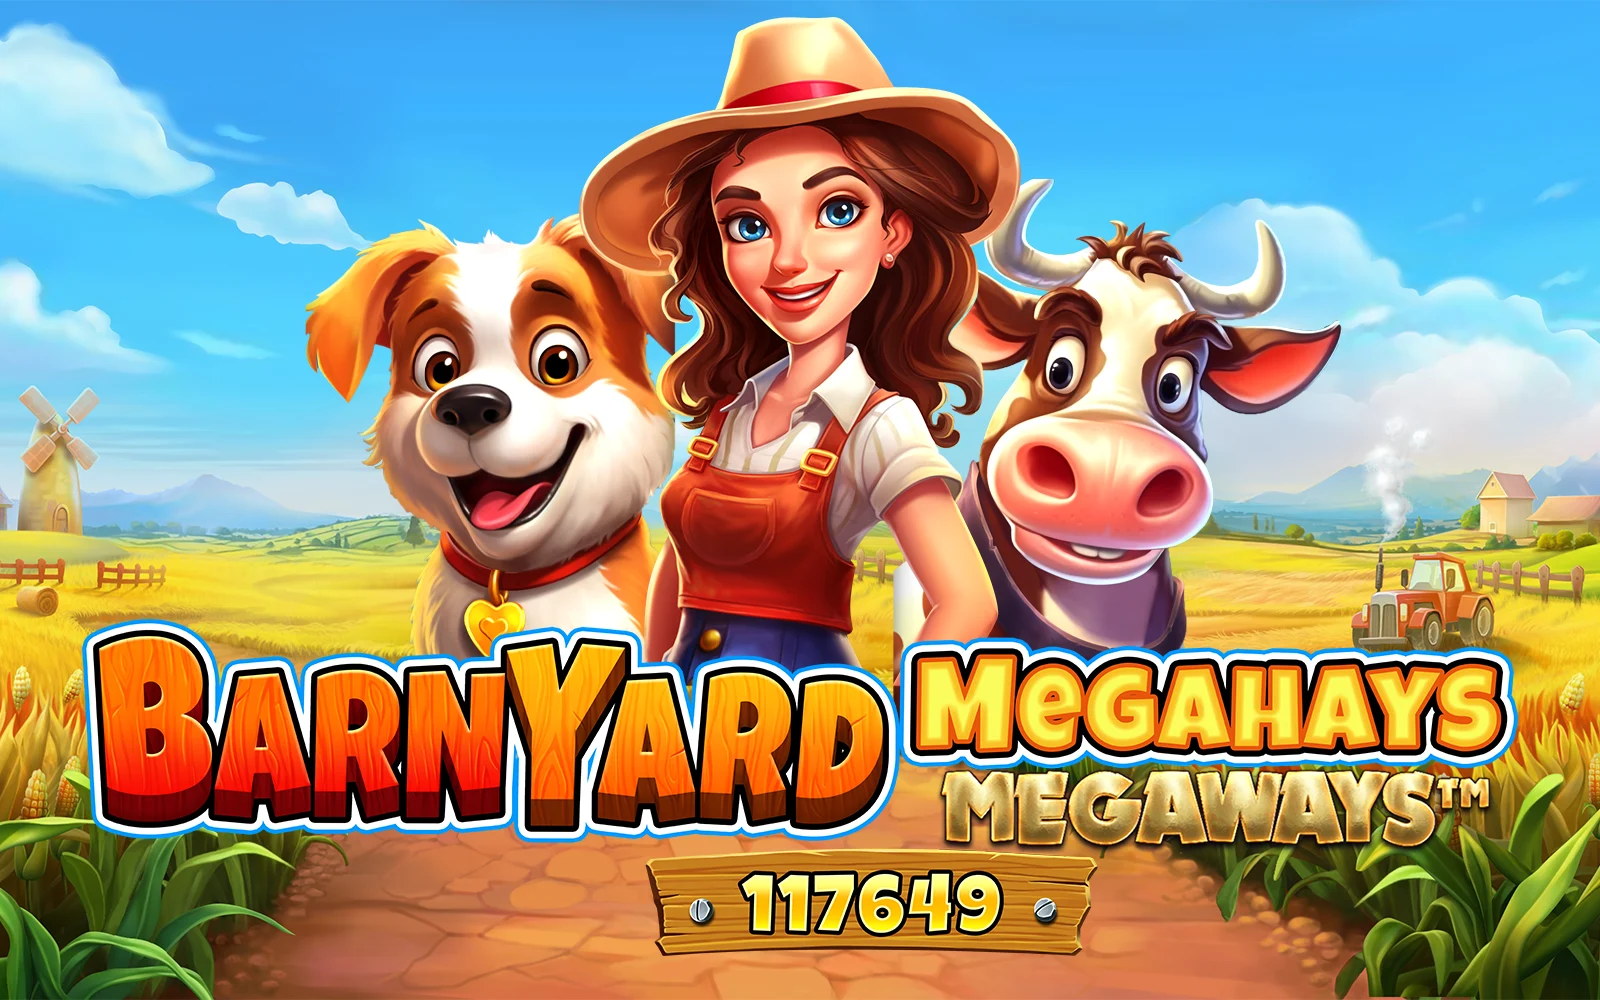 Gioca a Barnyard Megahays Megaways™ sul casino online Starcasino.be